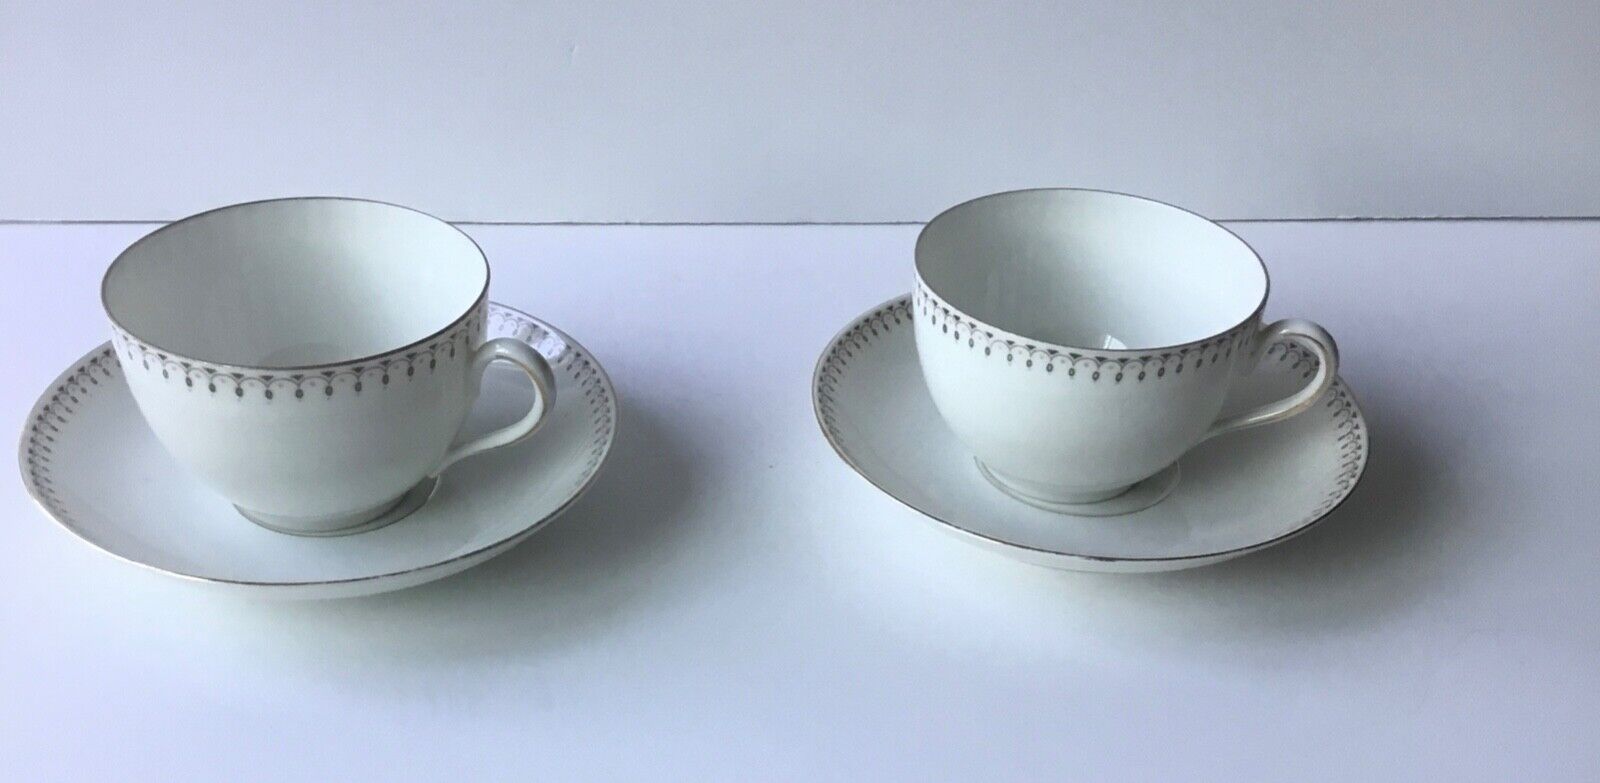 2 Antique 1884-1909 M. Z .Austria White teacups and saucers with drophandle trim